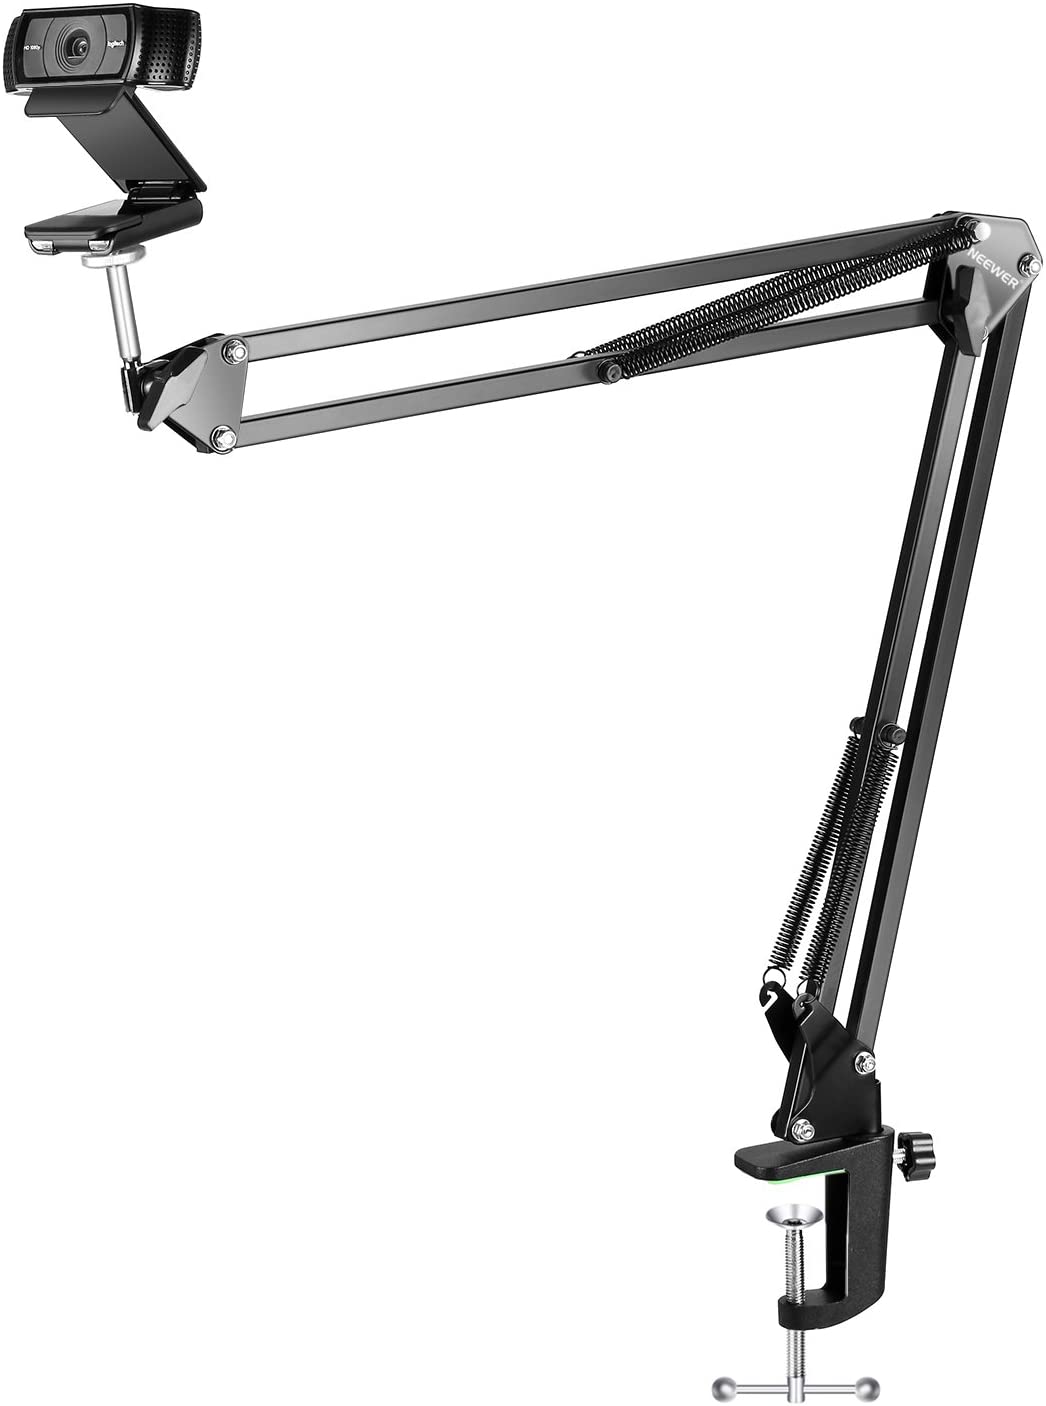 Neewer Mount Stand Suspension Boom Adjustable Desk Scissor for Logitech Webcam C922 C930E C930 C920 C615 Durable Iron Load Up to 4 Pounds 2 Kilograms Perfect for Video Recording